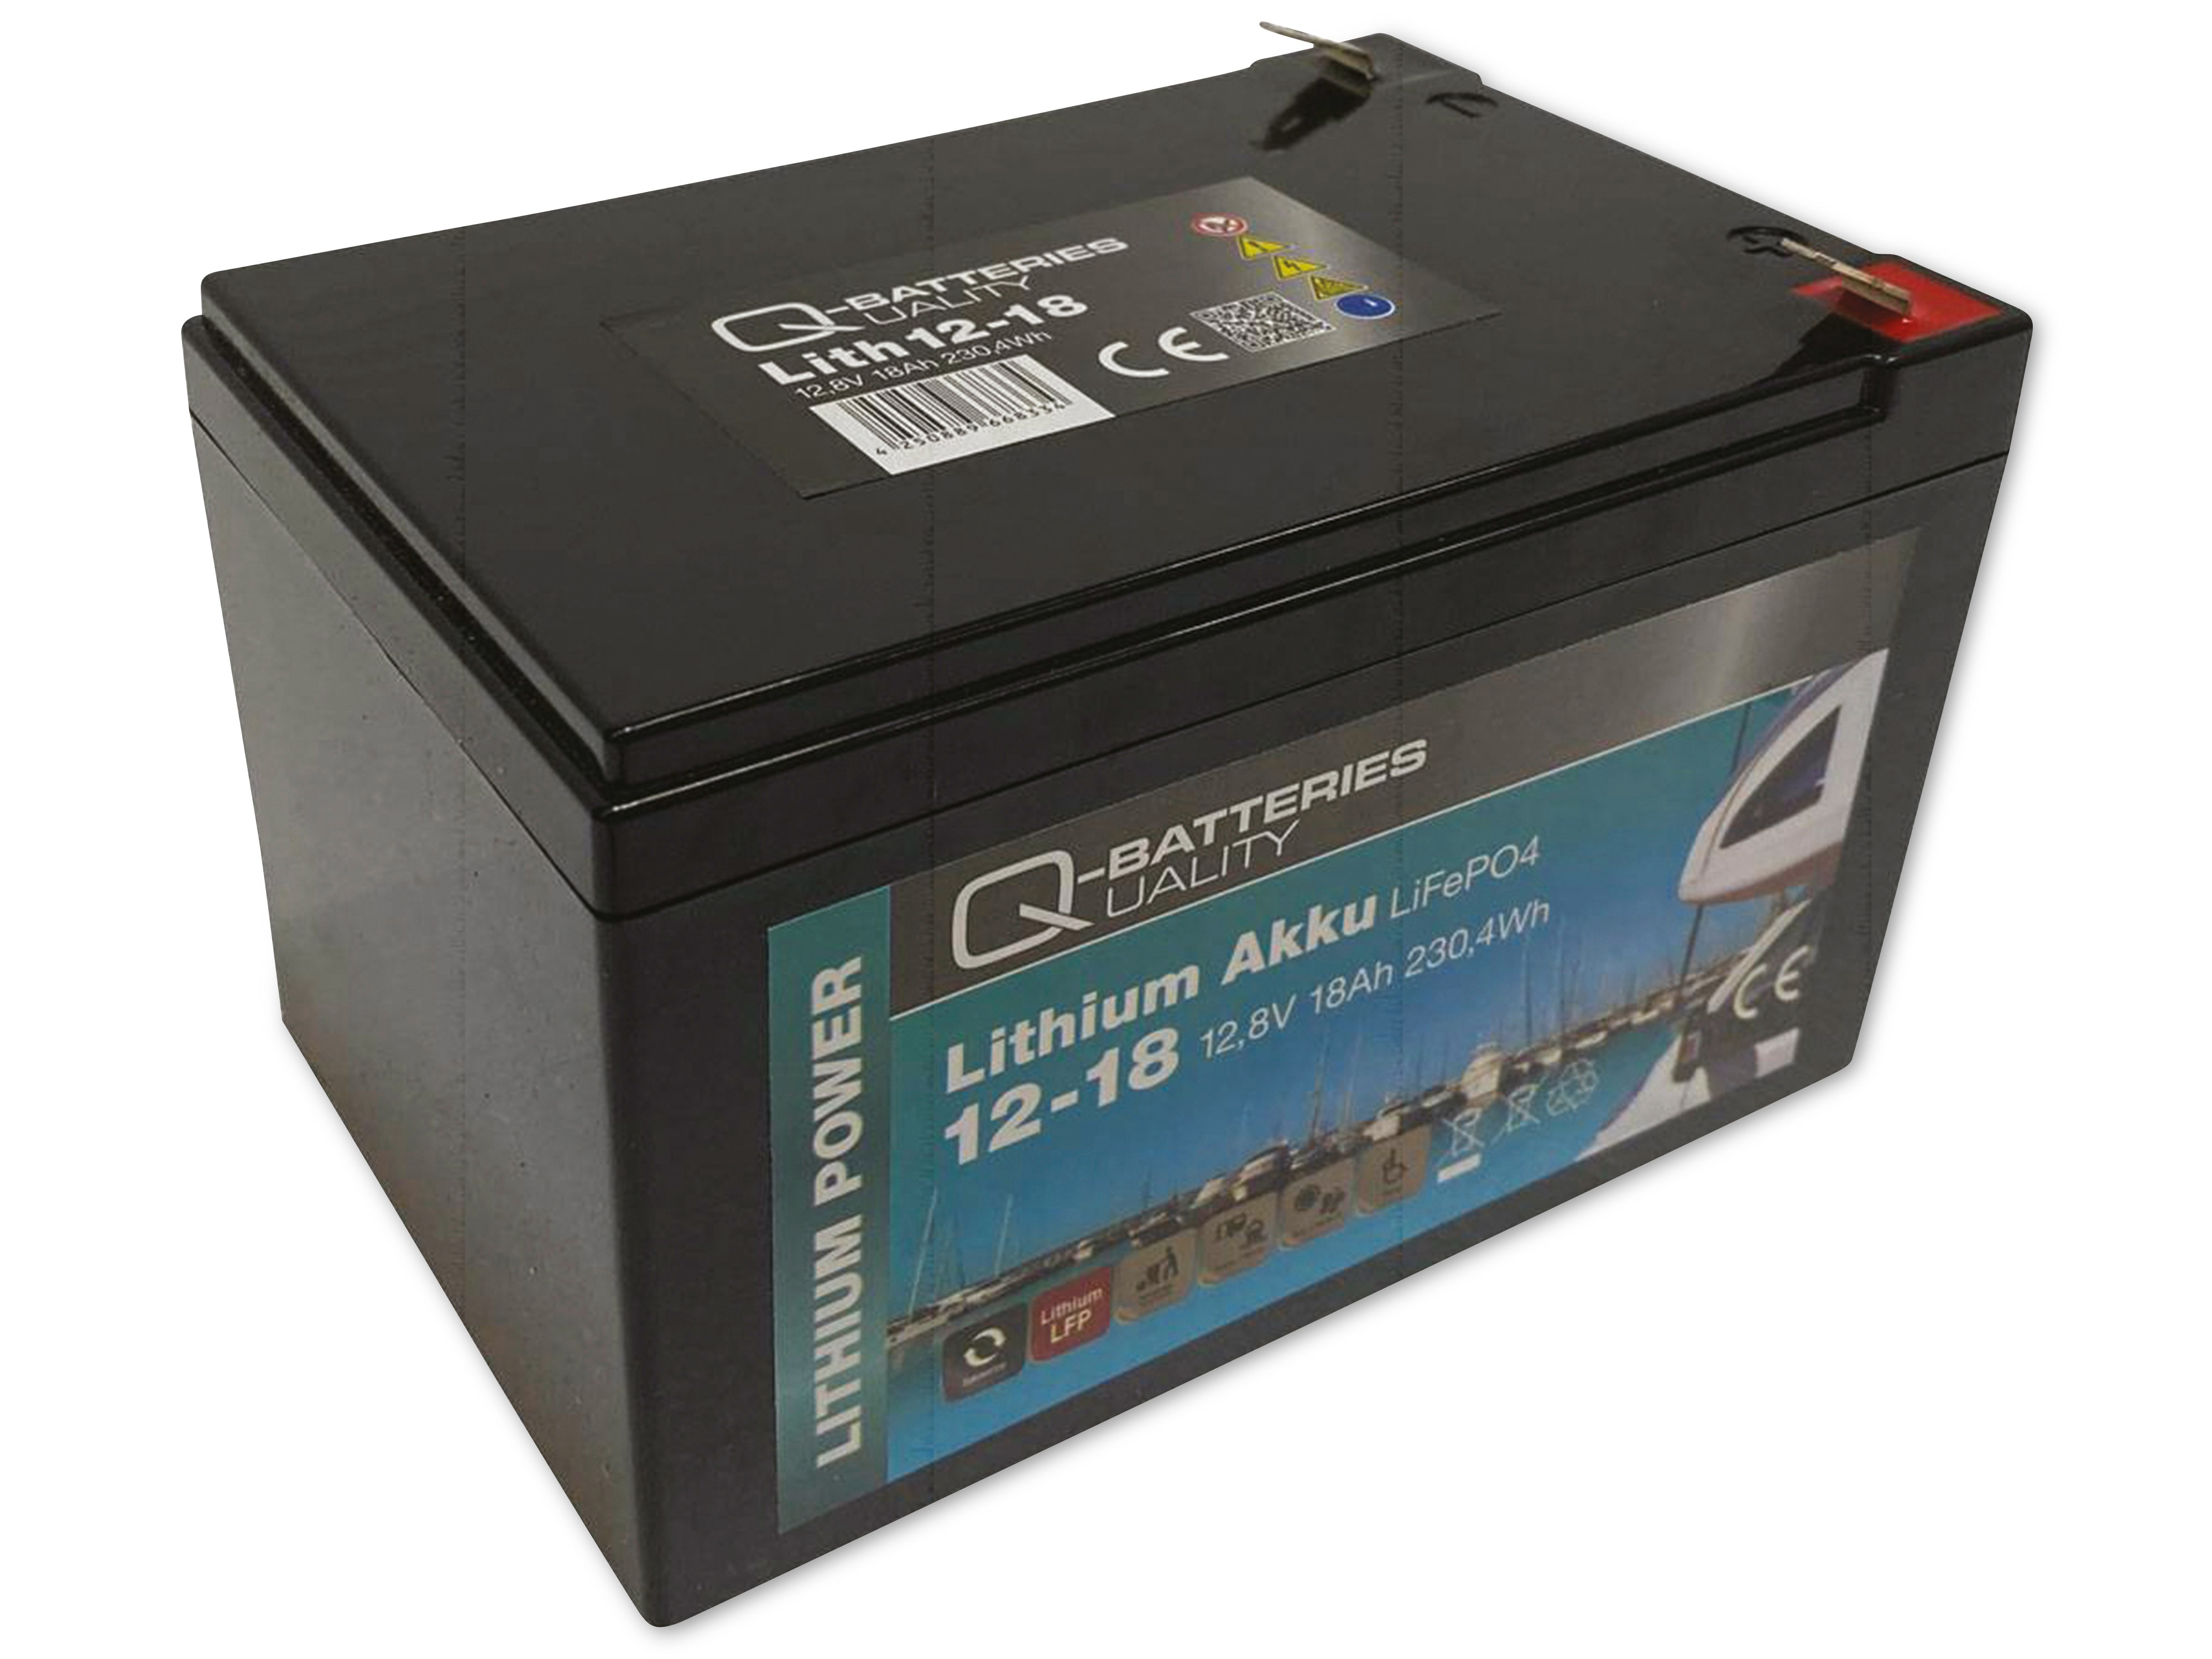 Q-BATTERIES Lithium Akku 12-18 12,8V, 18Ah 230,4WH LiFePO4 Batterie